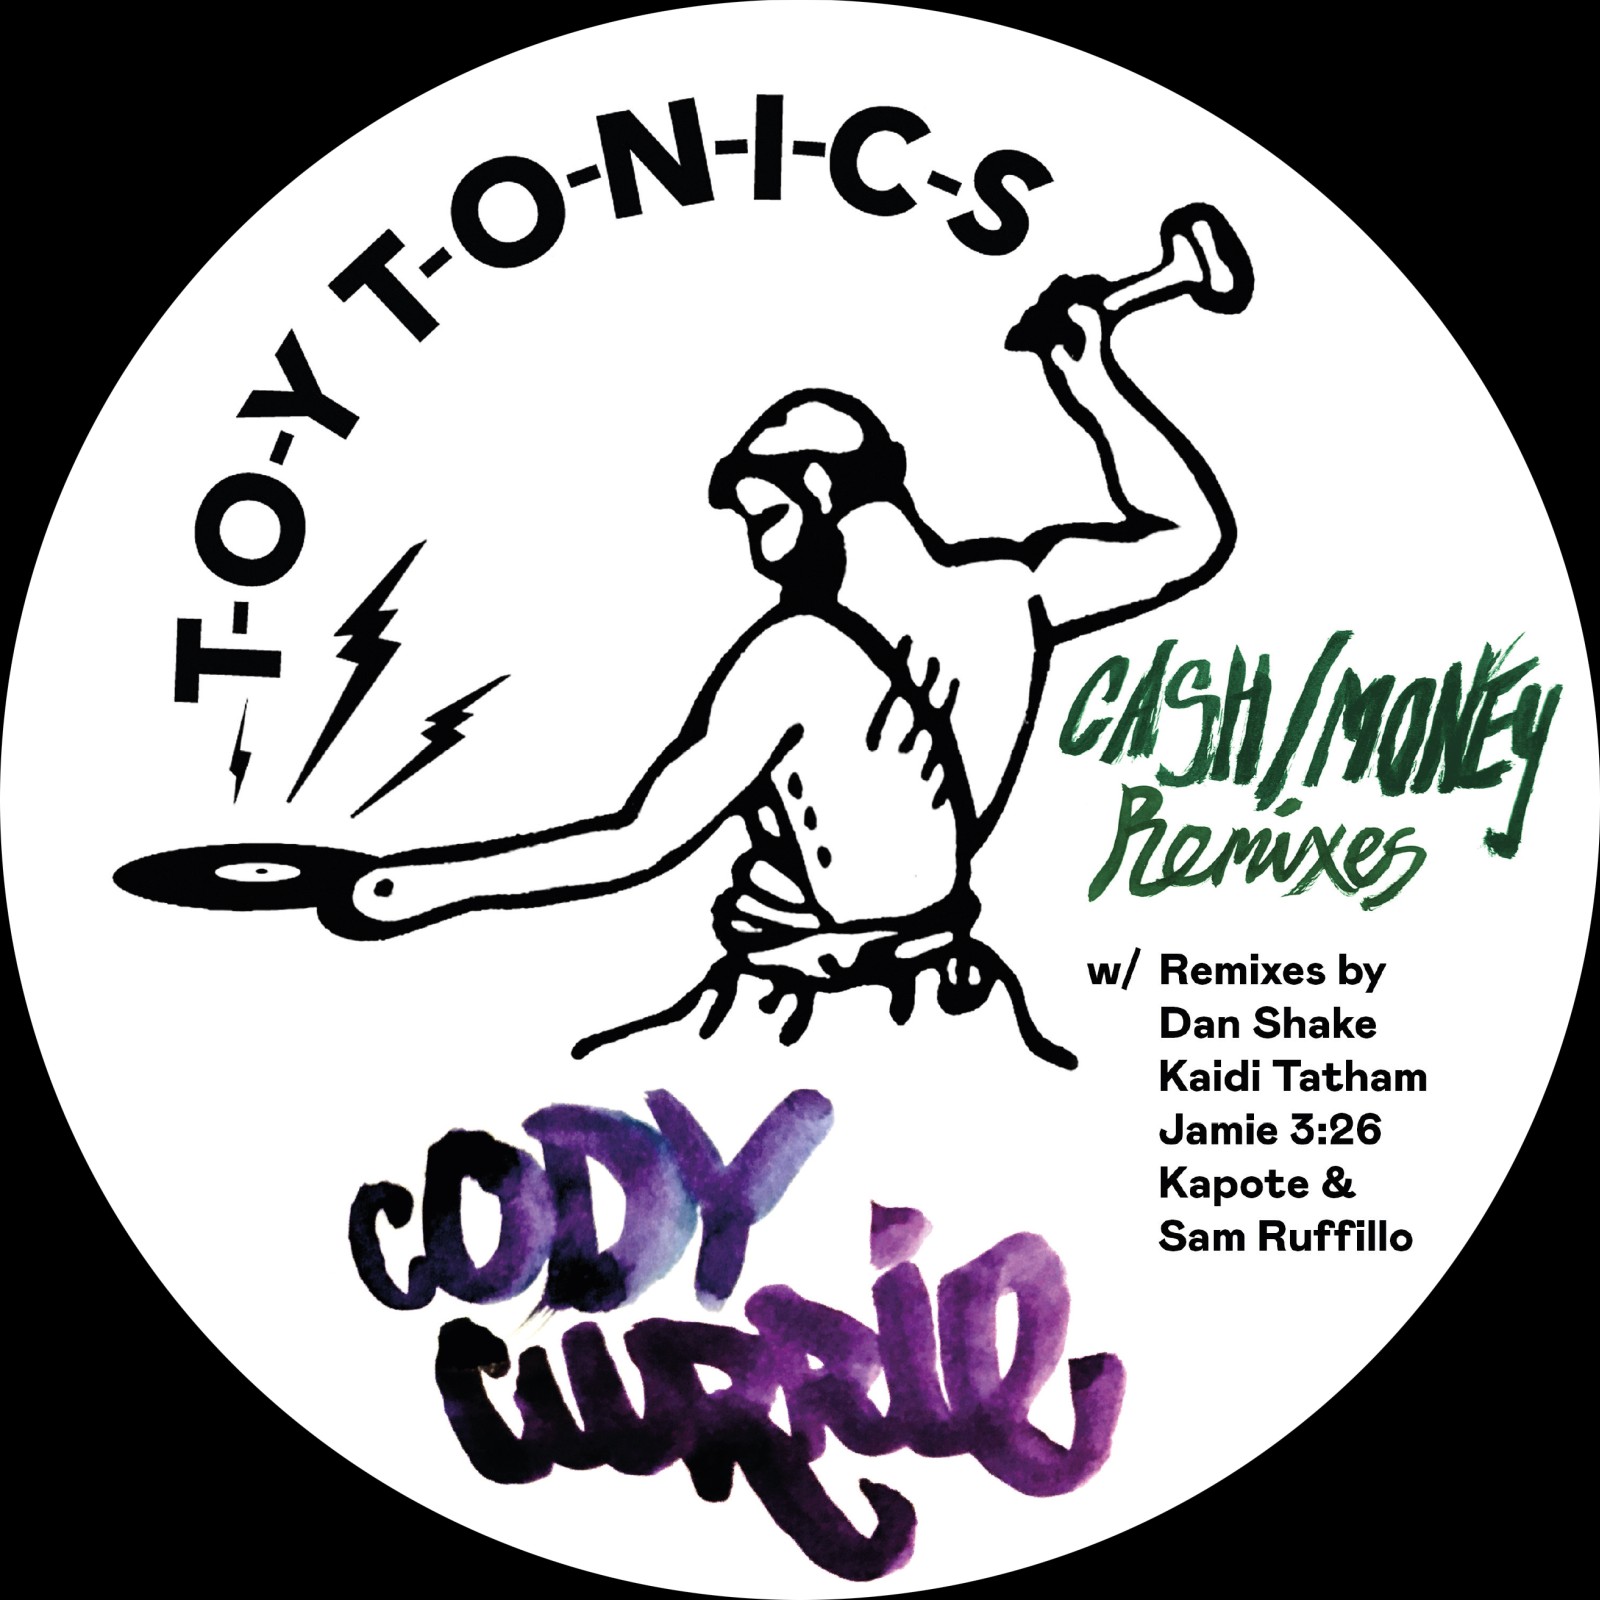 Cody Currie – Cash-Money Remixes [TOYT143]